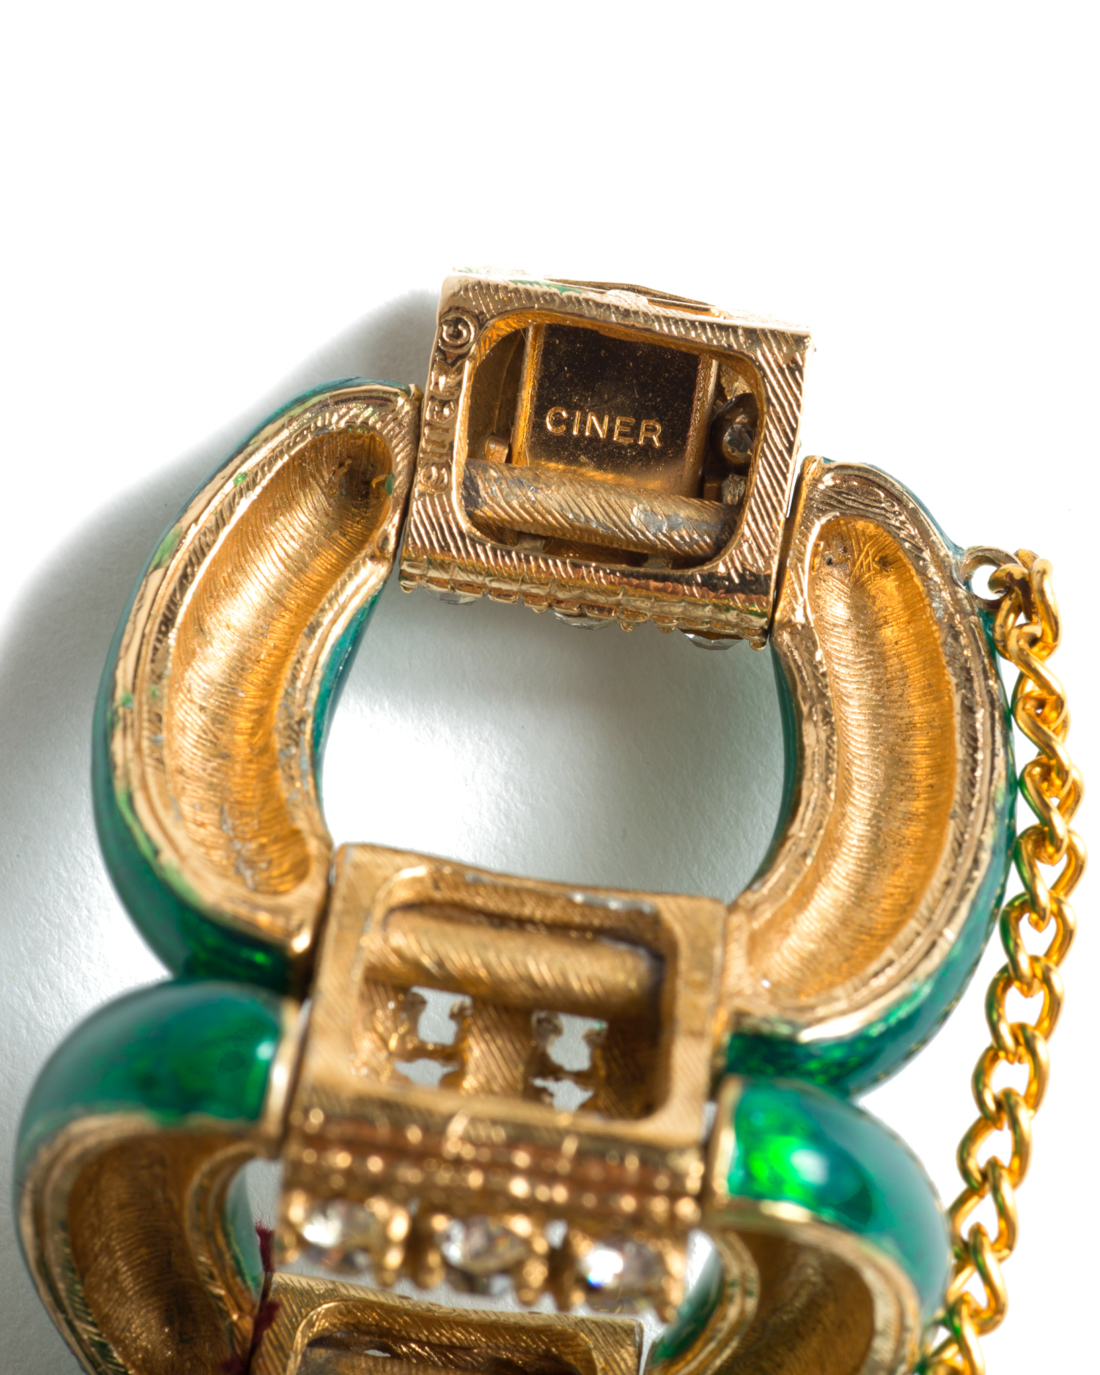 Regal Emerald Green Enameled Bracelet,by Ciner, circa 1960's